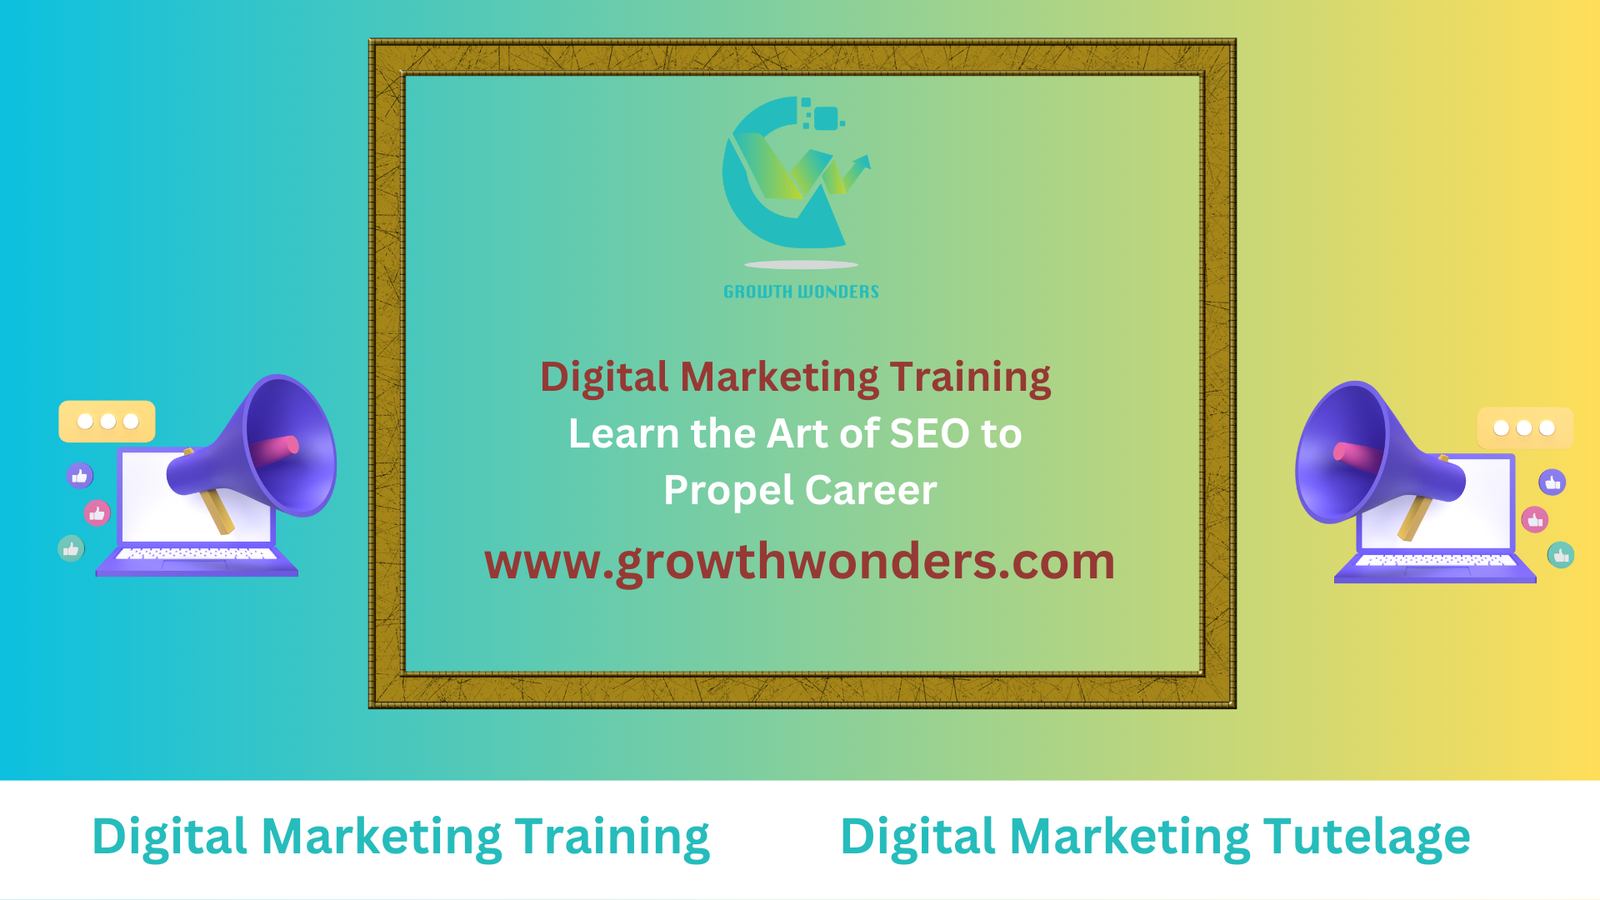 Get Job with Digital Marketing Training in 4 Weeks